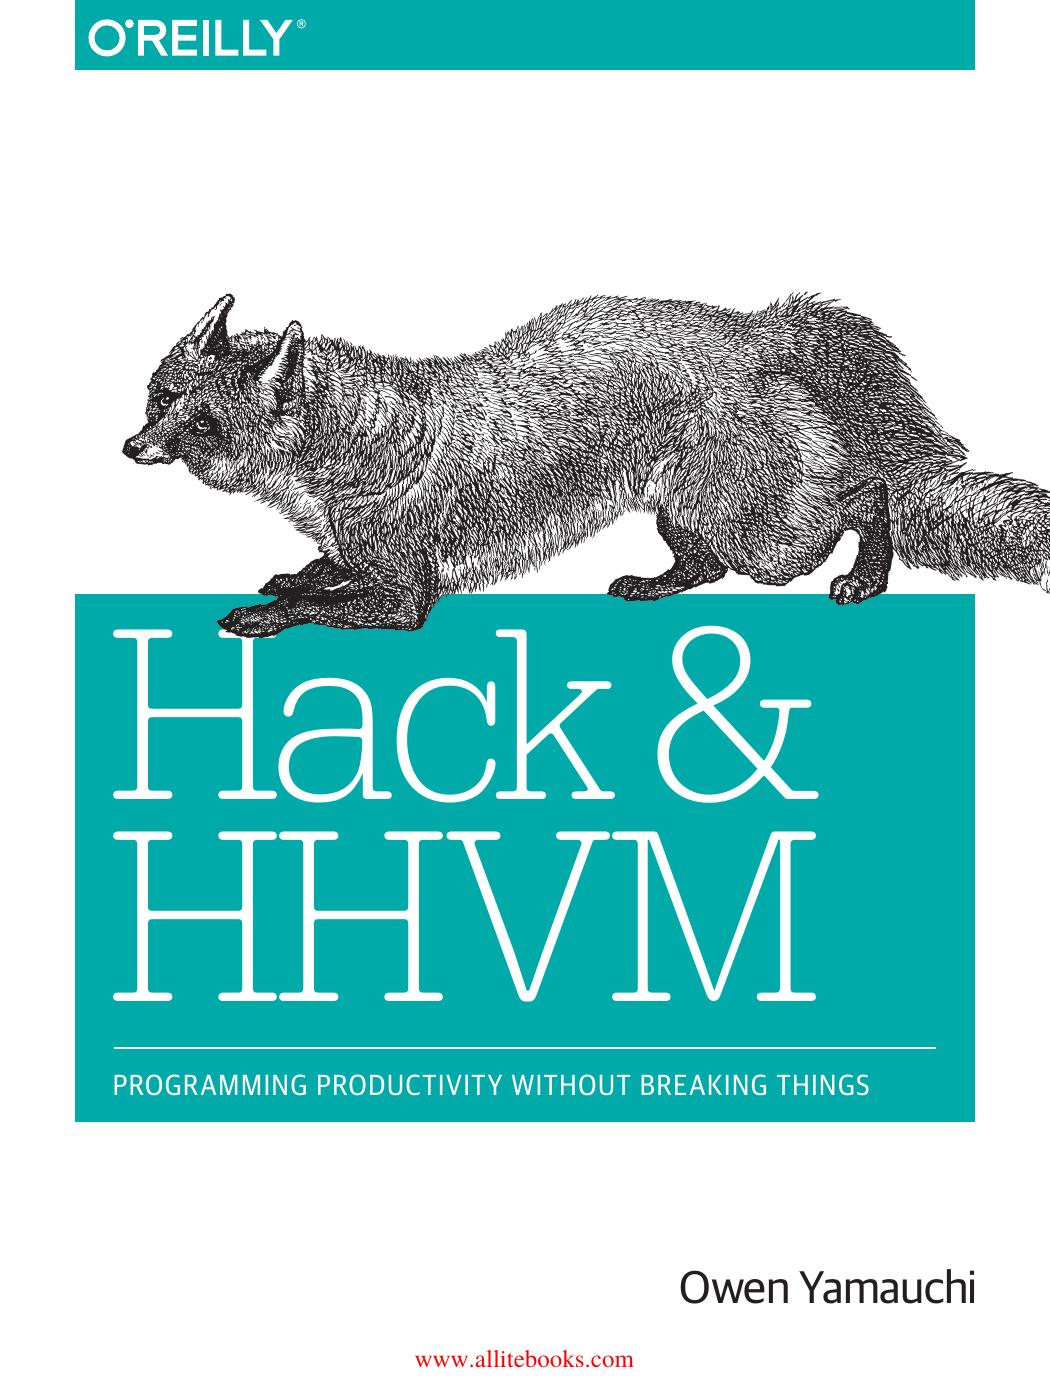 Hack and HHVM by Owen Yamauchi